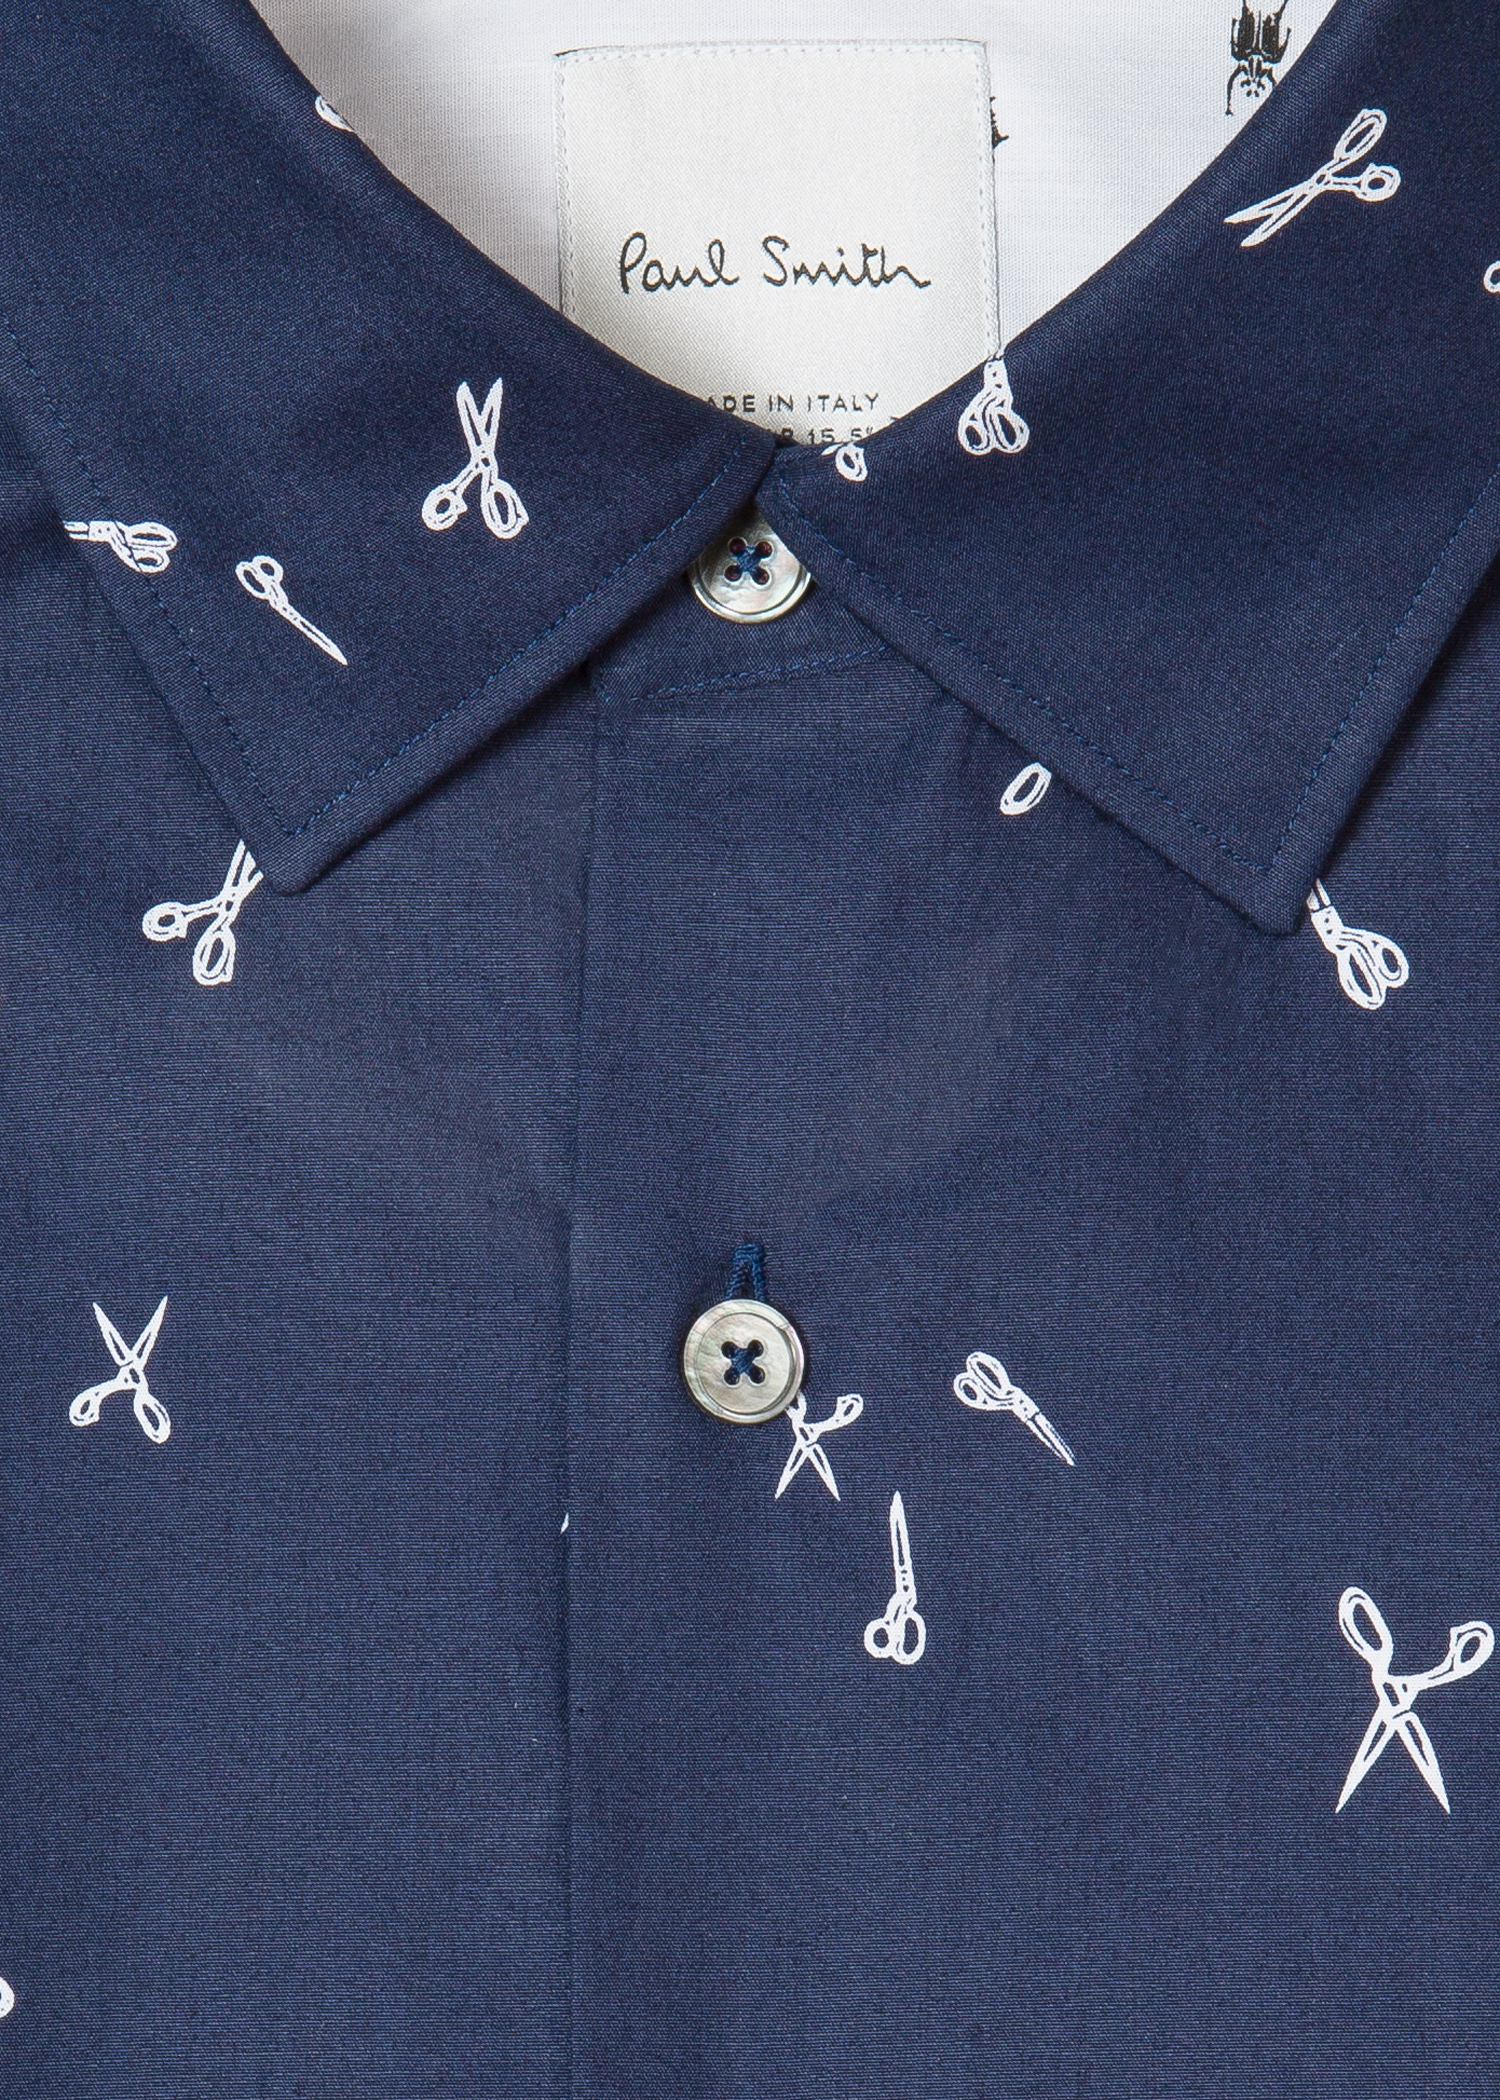 Collar view - Men's Tailored-Fit Navy 'Scissors' Print Cotton Shirt Paul Smith